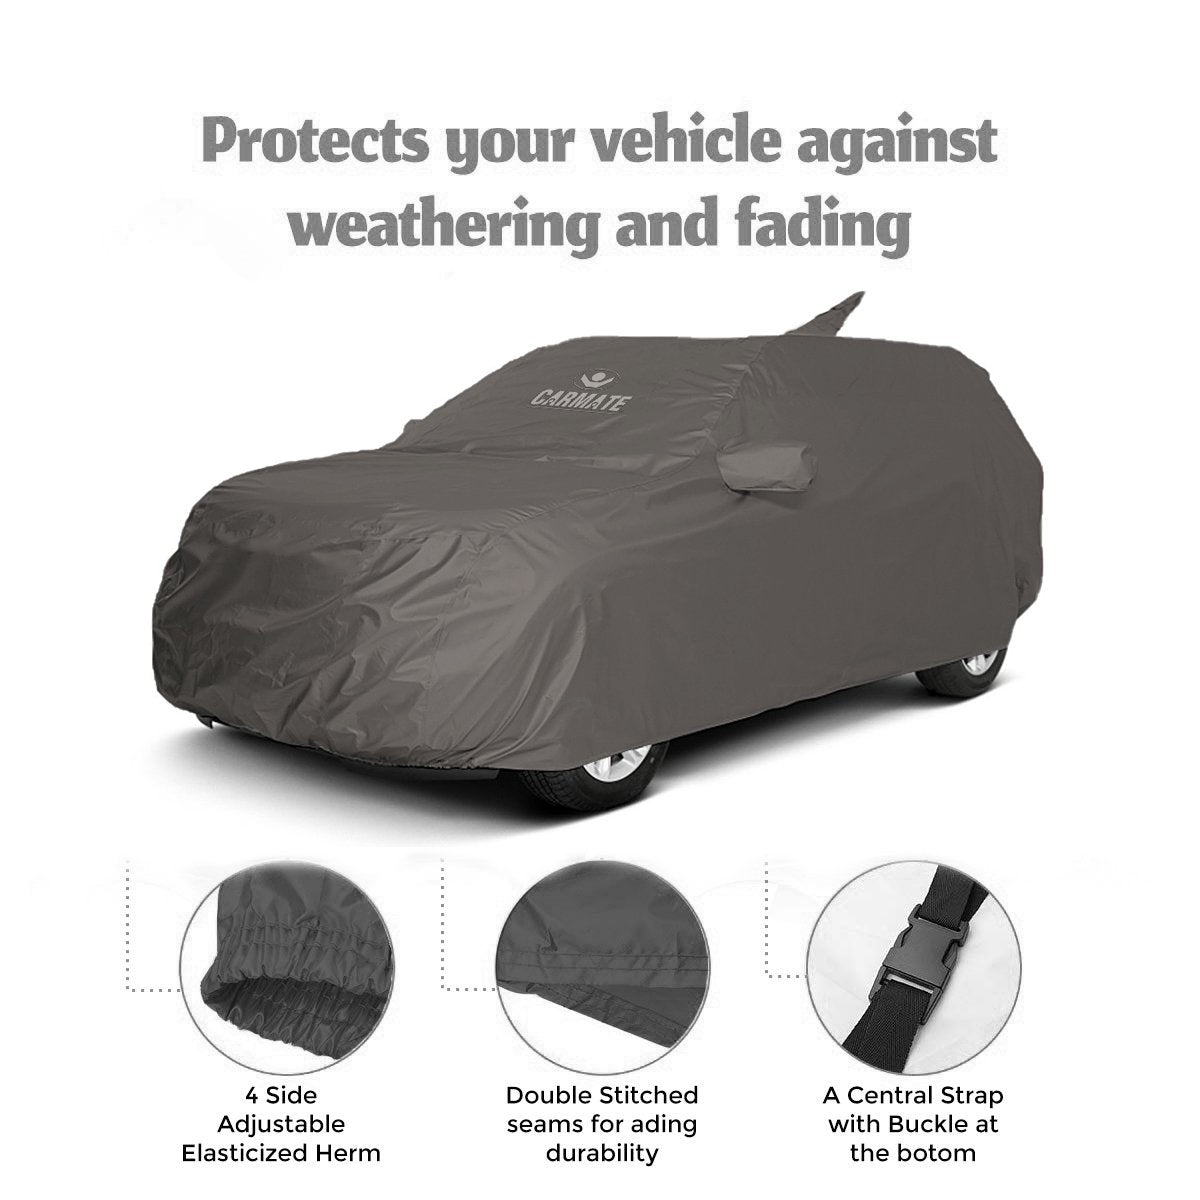 Carmate Car Body Cover 100% Waterproof Pride (Grey) for Mahindra - XUV 300 - CARMATE®